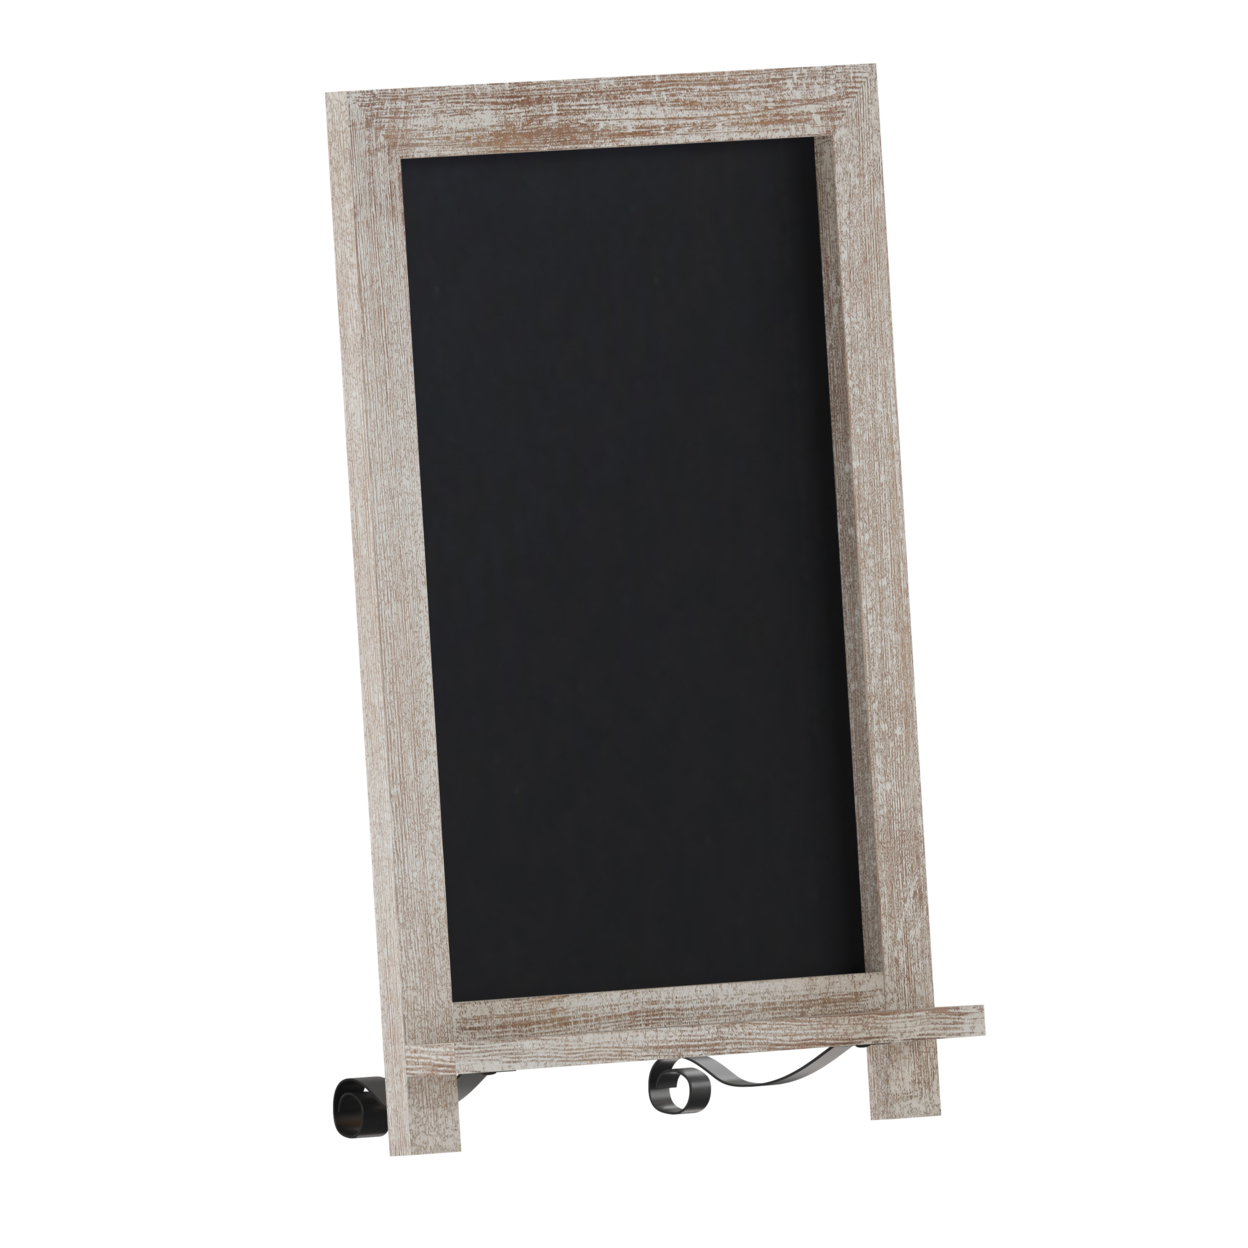 Magnetic Chalkboard, Distressed Gray Wood Frame, Metal Scrolled Legs